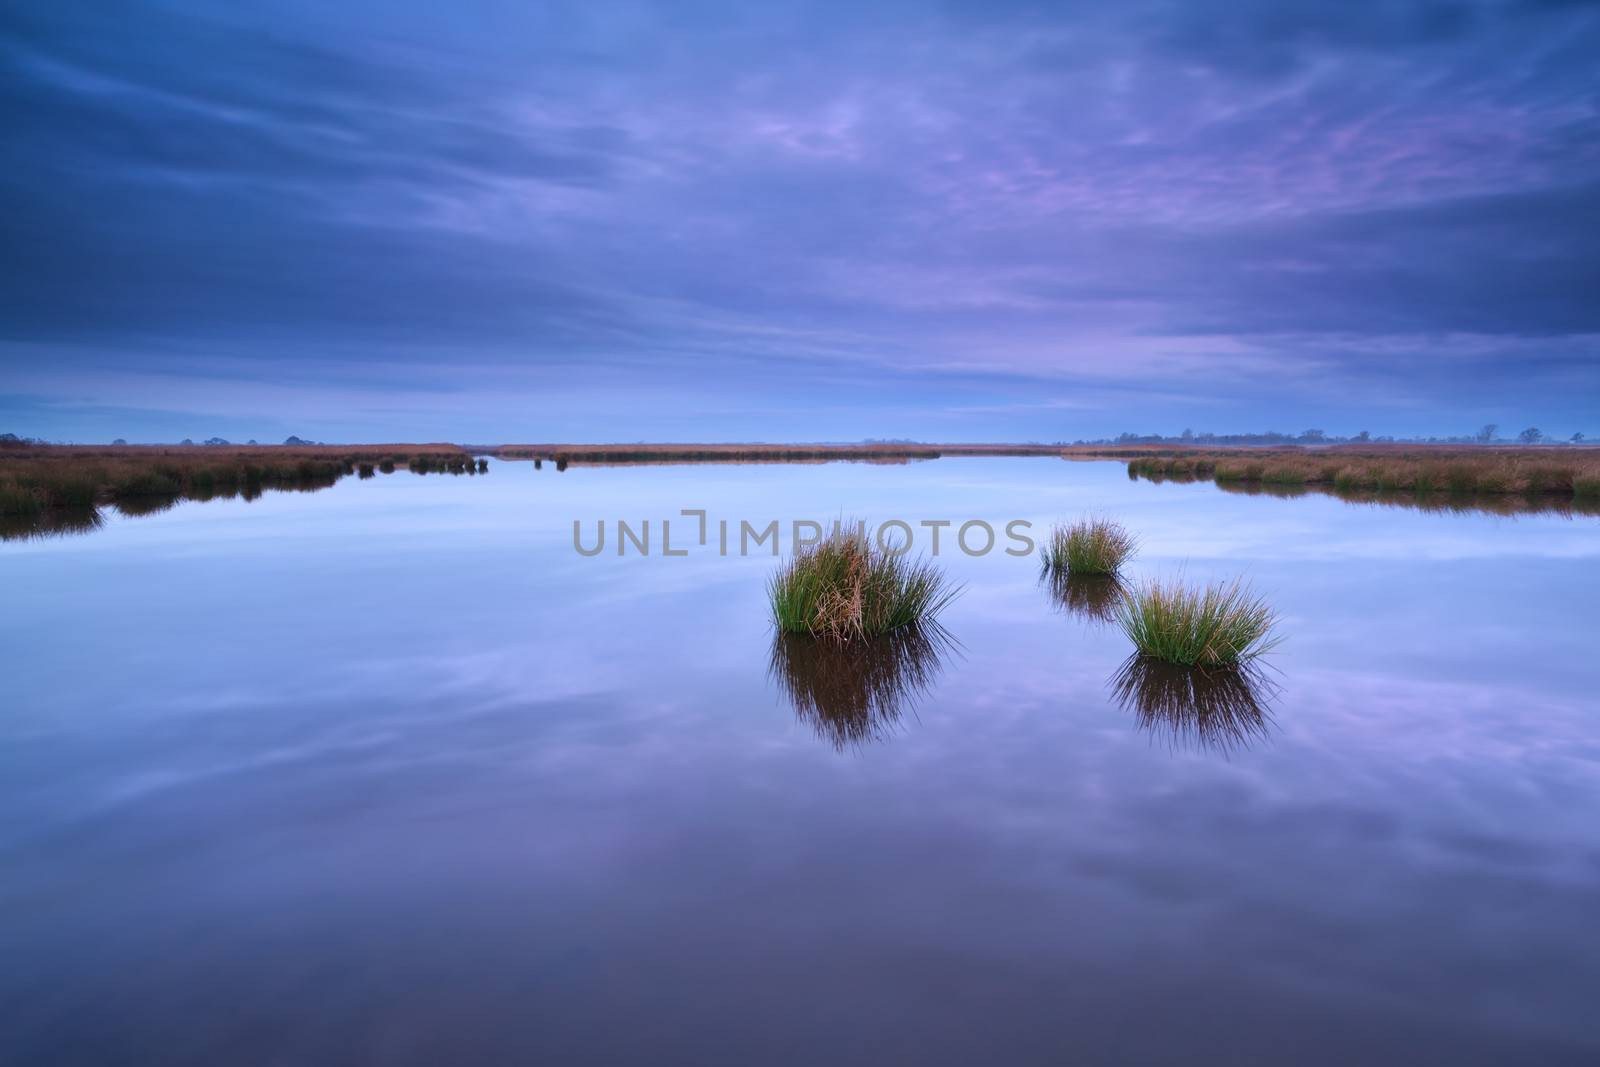 purple autumn sunrise over wild lake, Onlanden, Drenthe, Netherlands